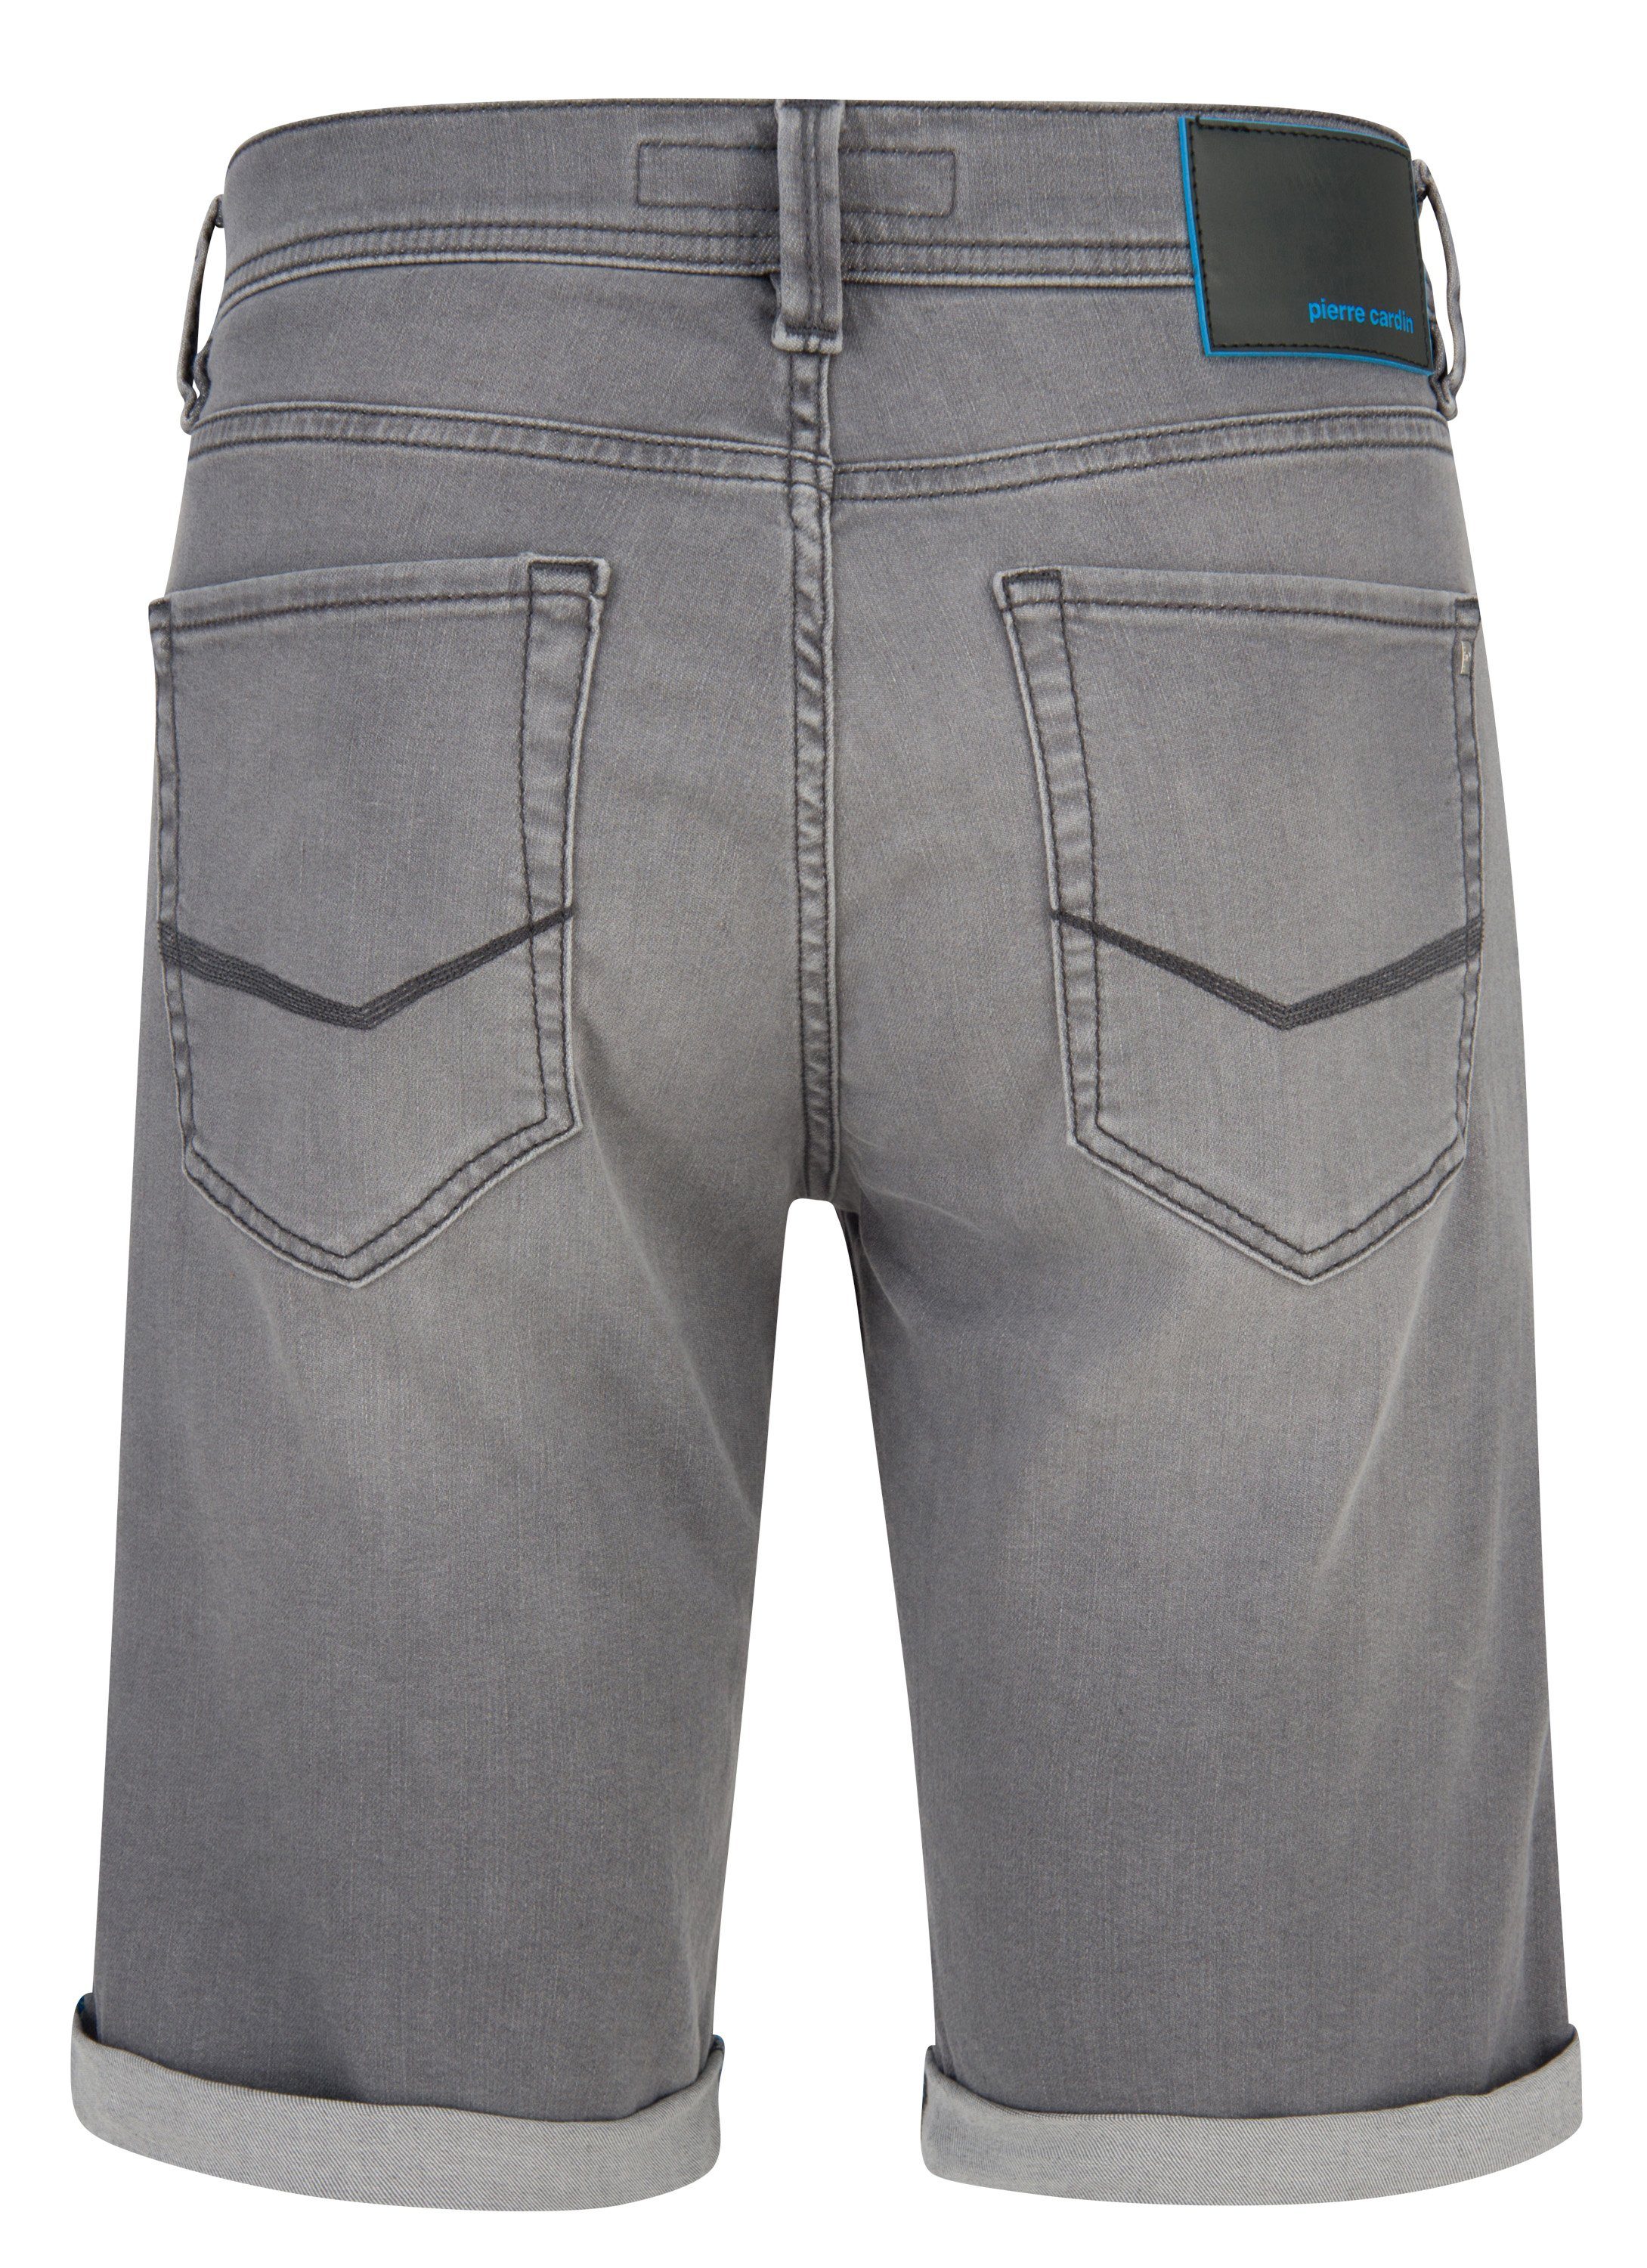 PIERRE Cardin 8881.83 CARDIN Pierre FUTUREFLEX SHORTS anthrazit 3452 5-Pocket-Jeans